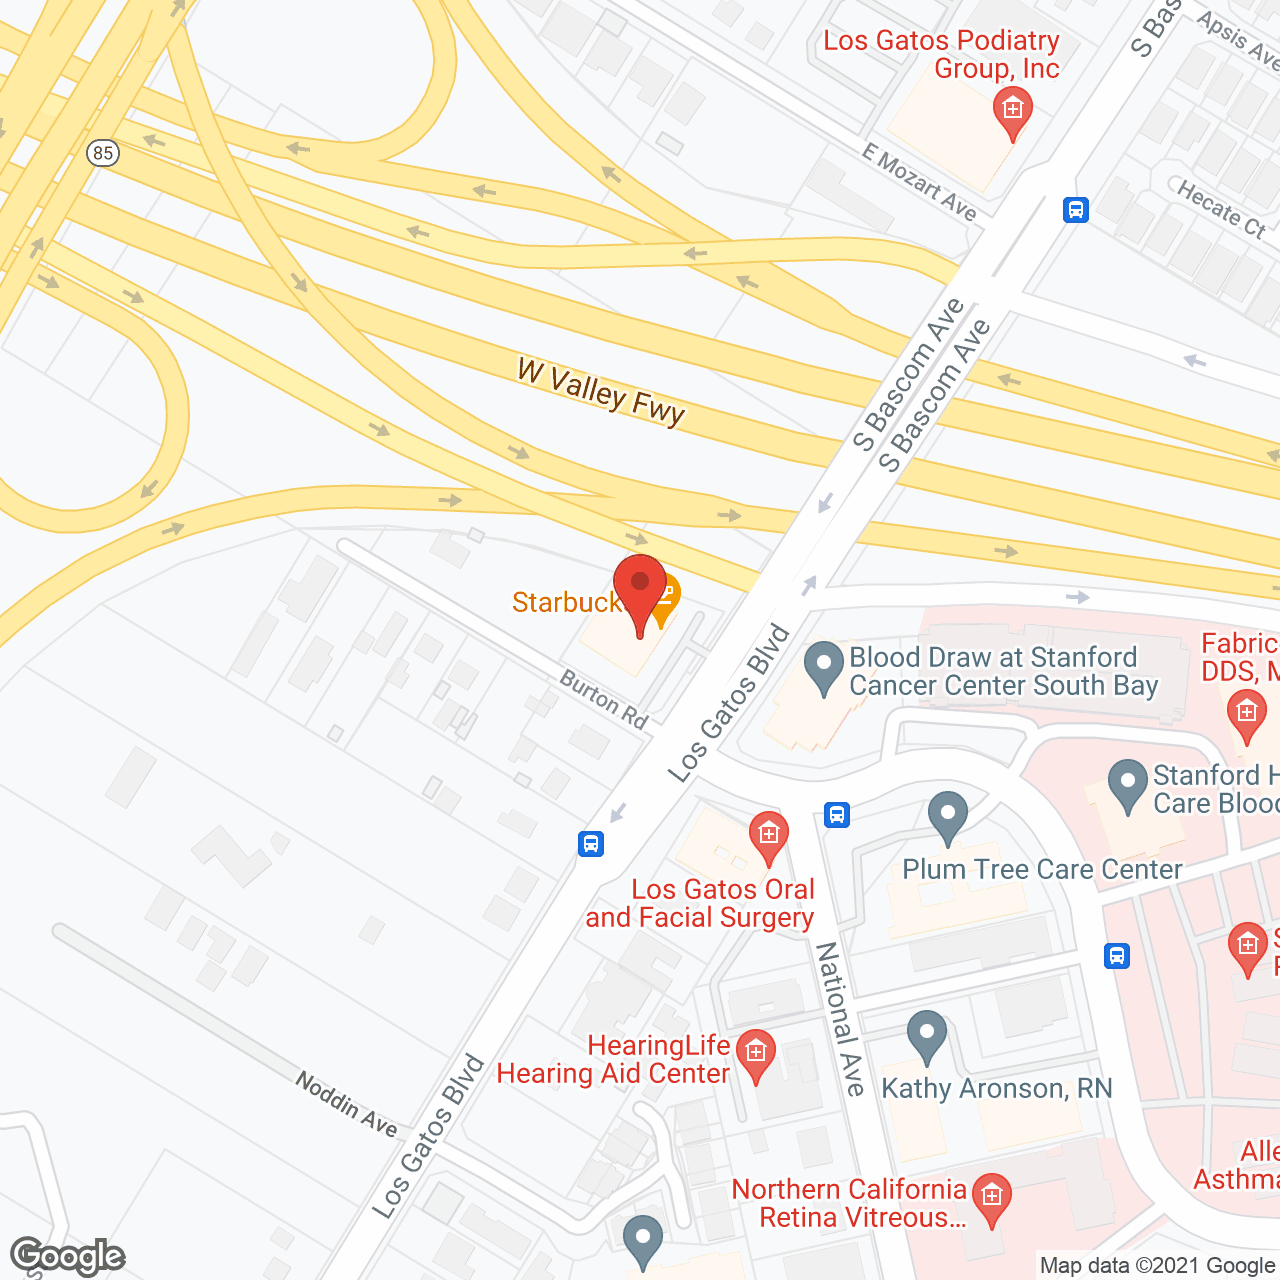 TheKey Los Gatos in google map